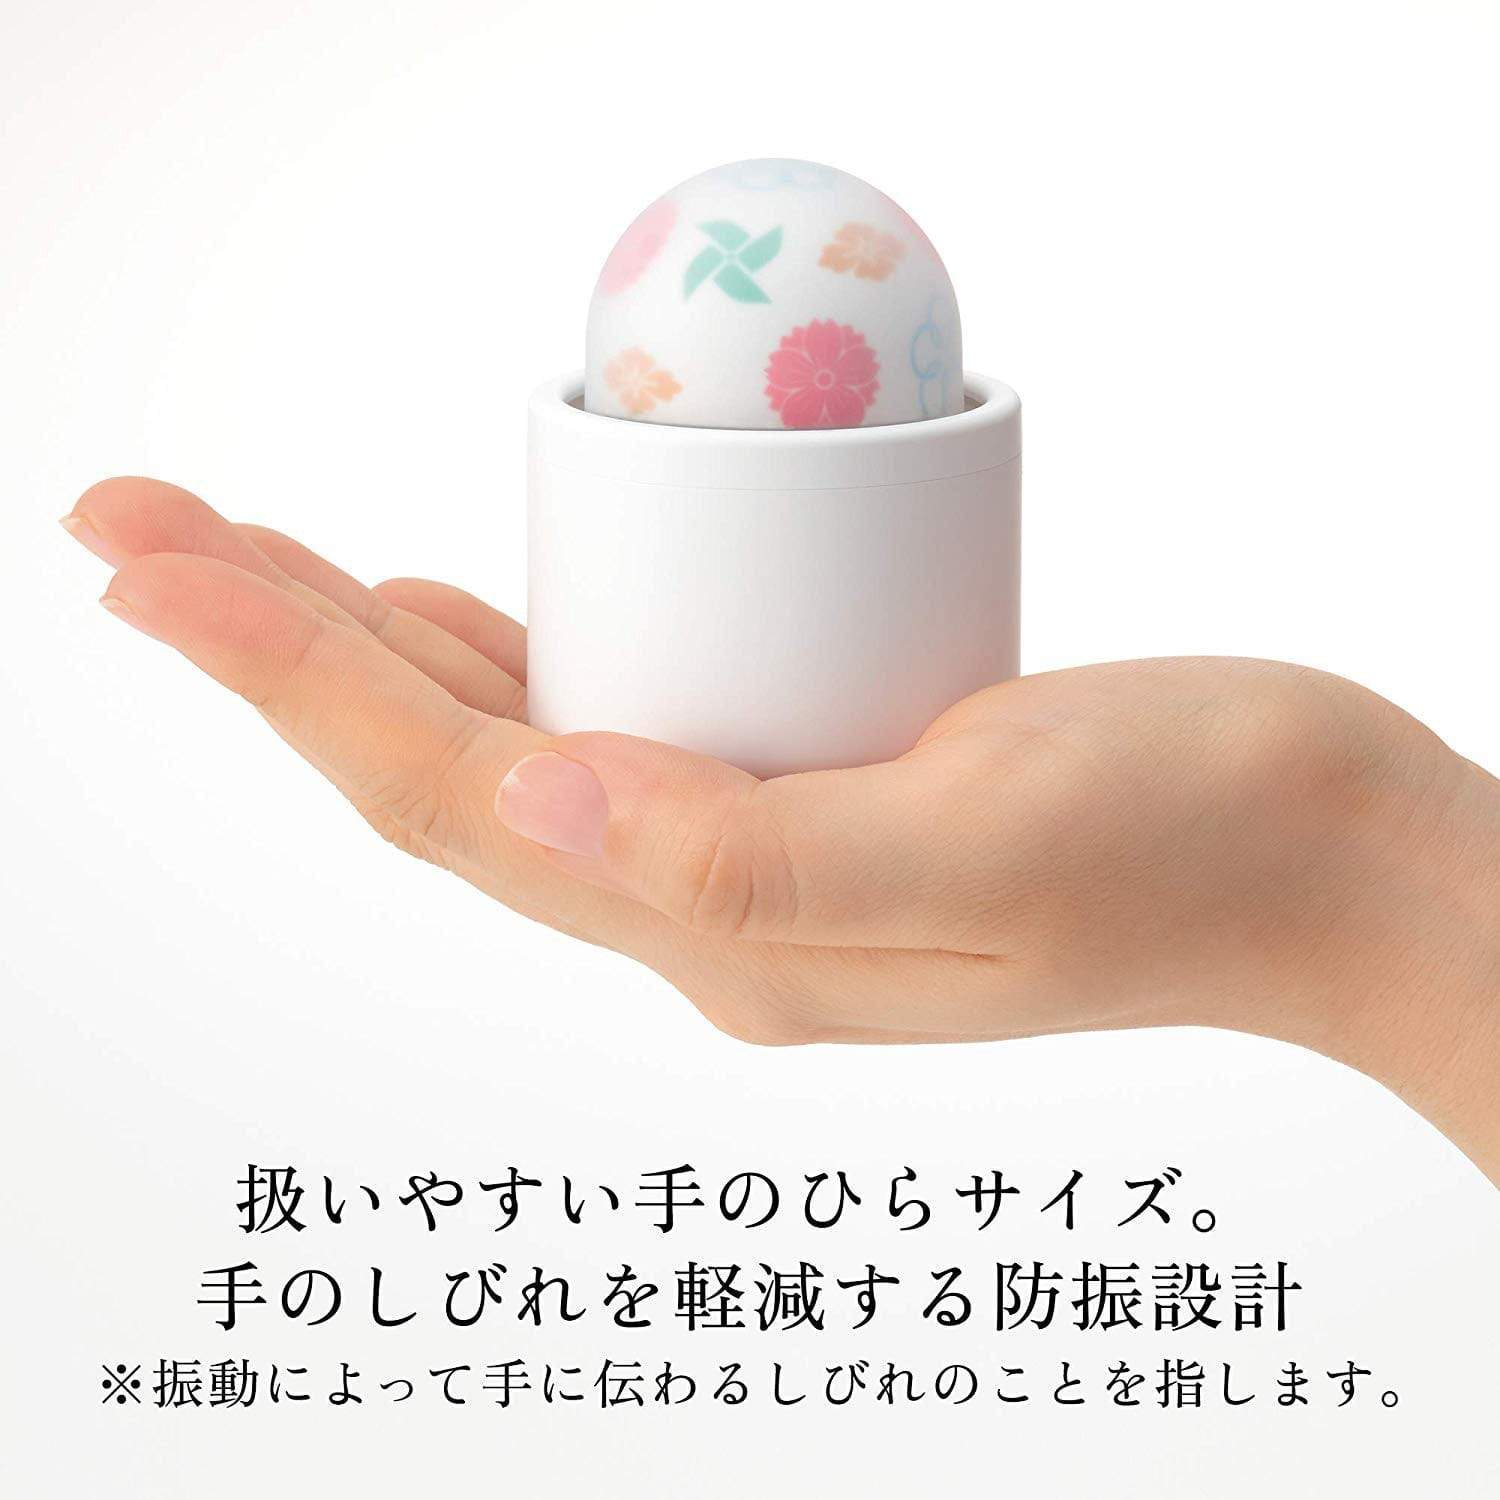 Tenga - Iroha Kaze-Temari Clit Massager (White) -  Clit Massager (Vibration) Rechargeable  Durio.sg